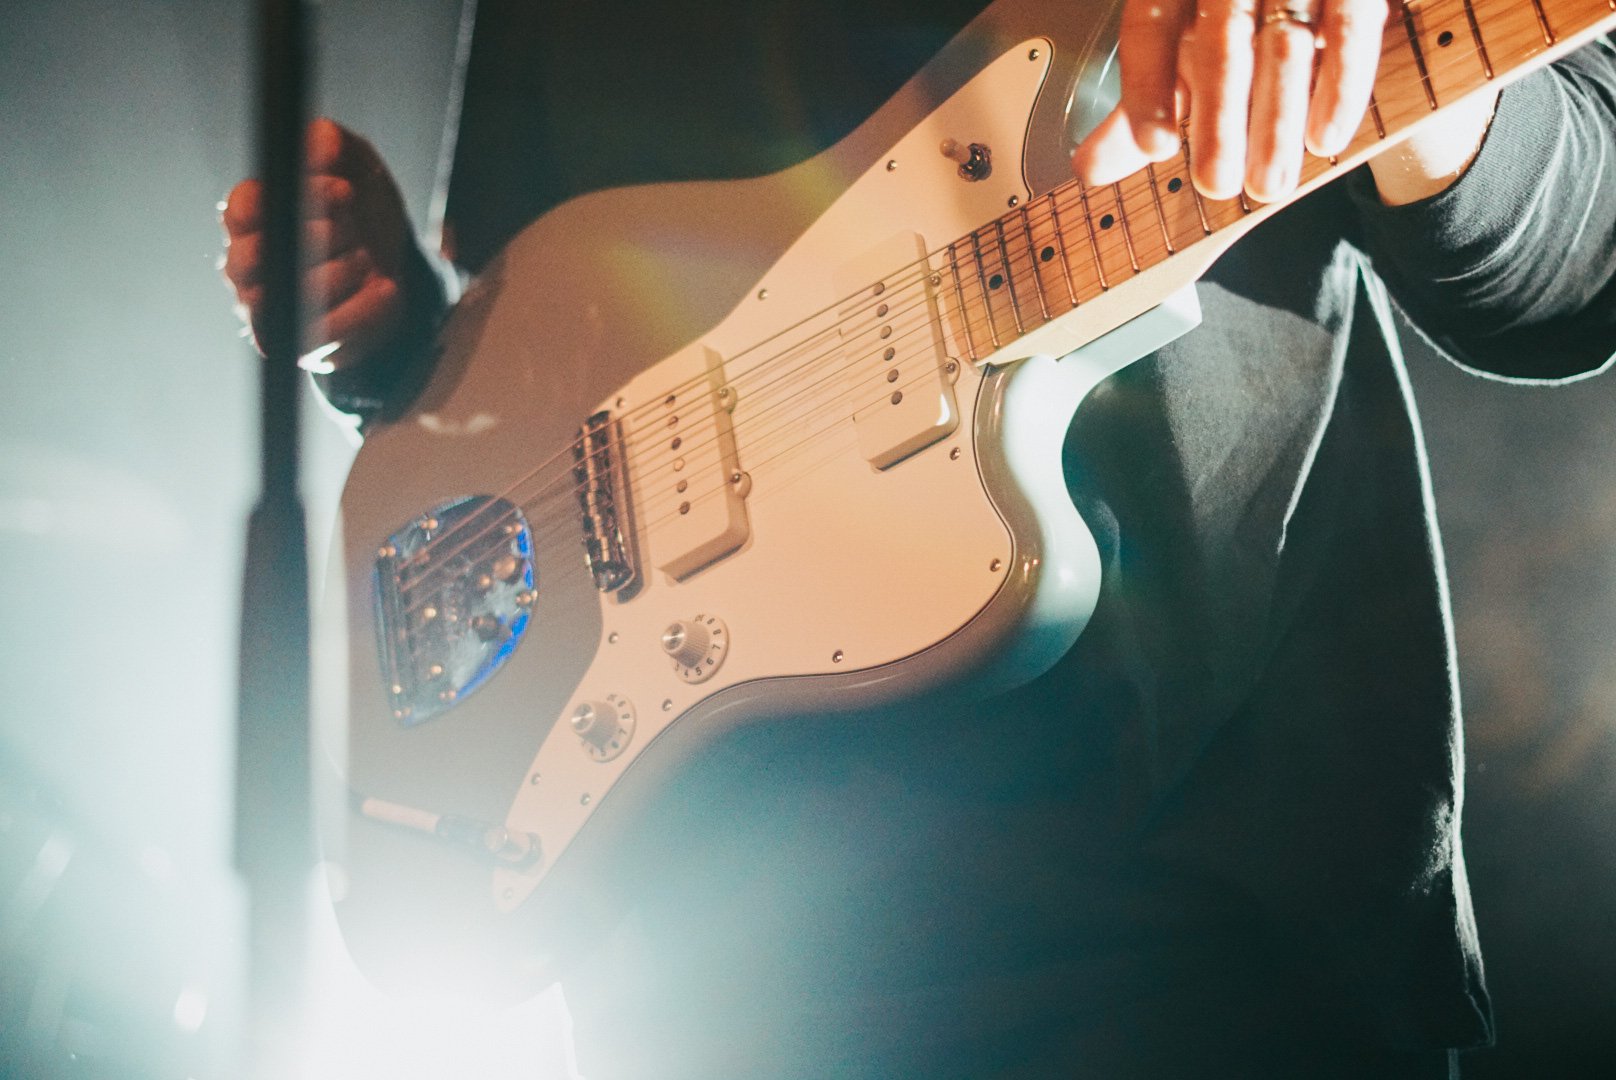  Caleb Chapman's guitar shines bright in the light of Antone’s. 